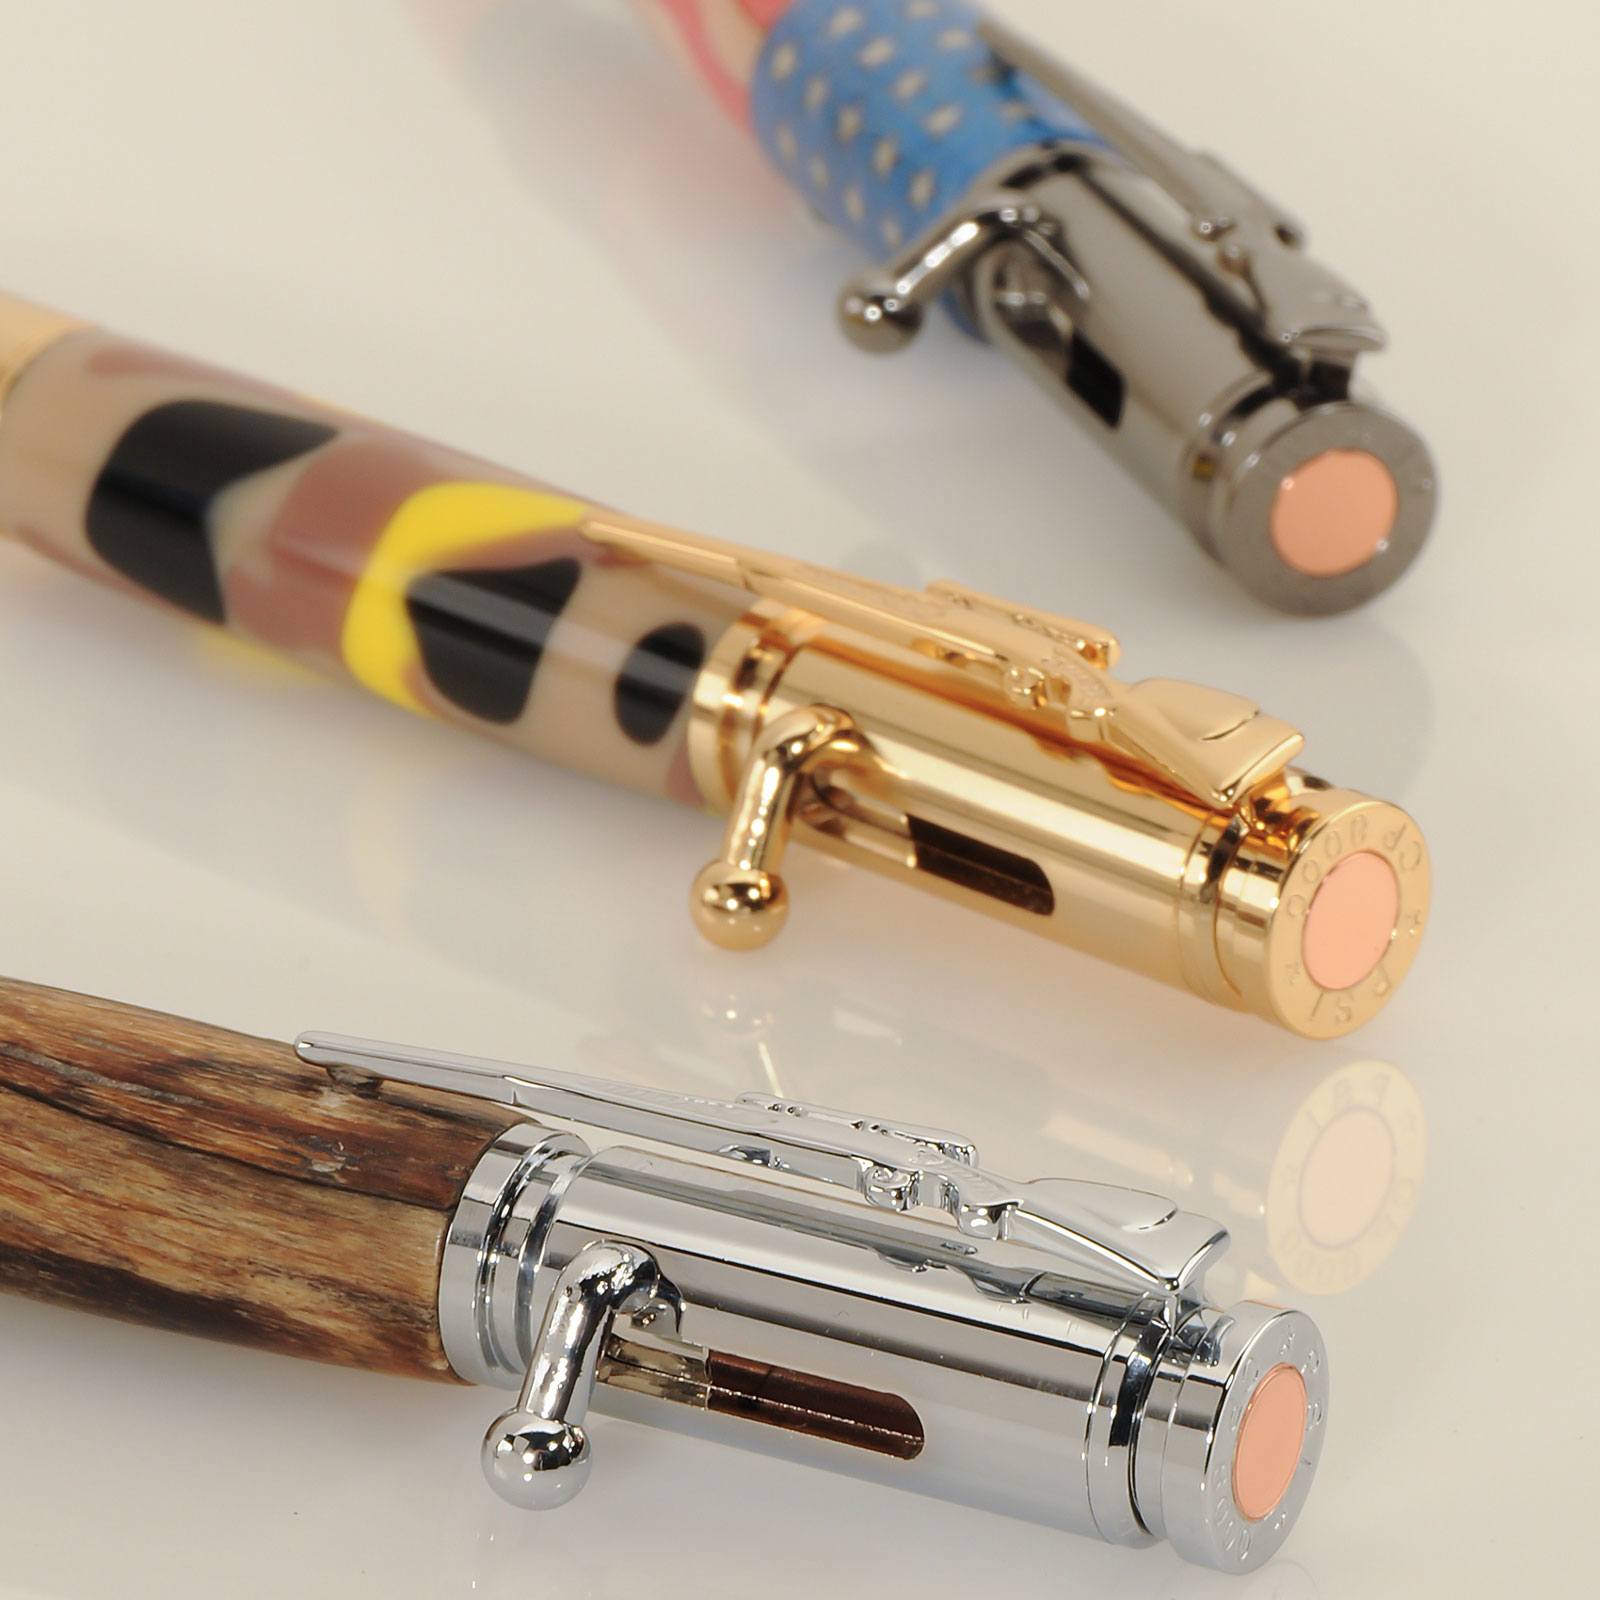 3 Mechanical Carpenters Pencil Kit Starter Set at Penn State Industries